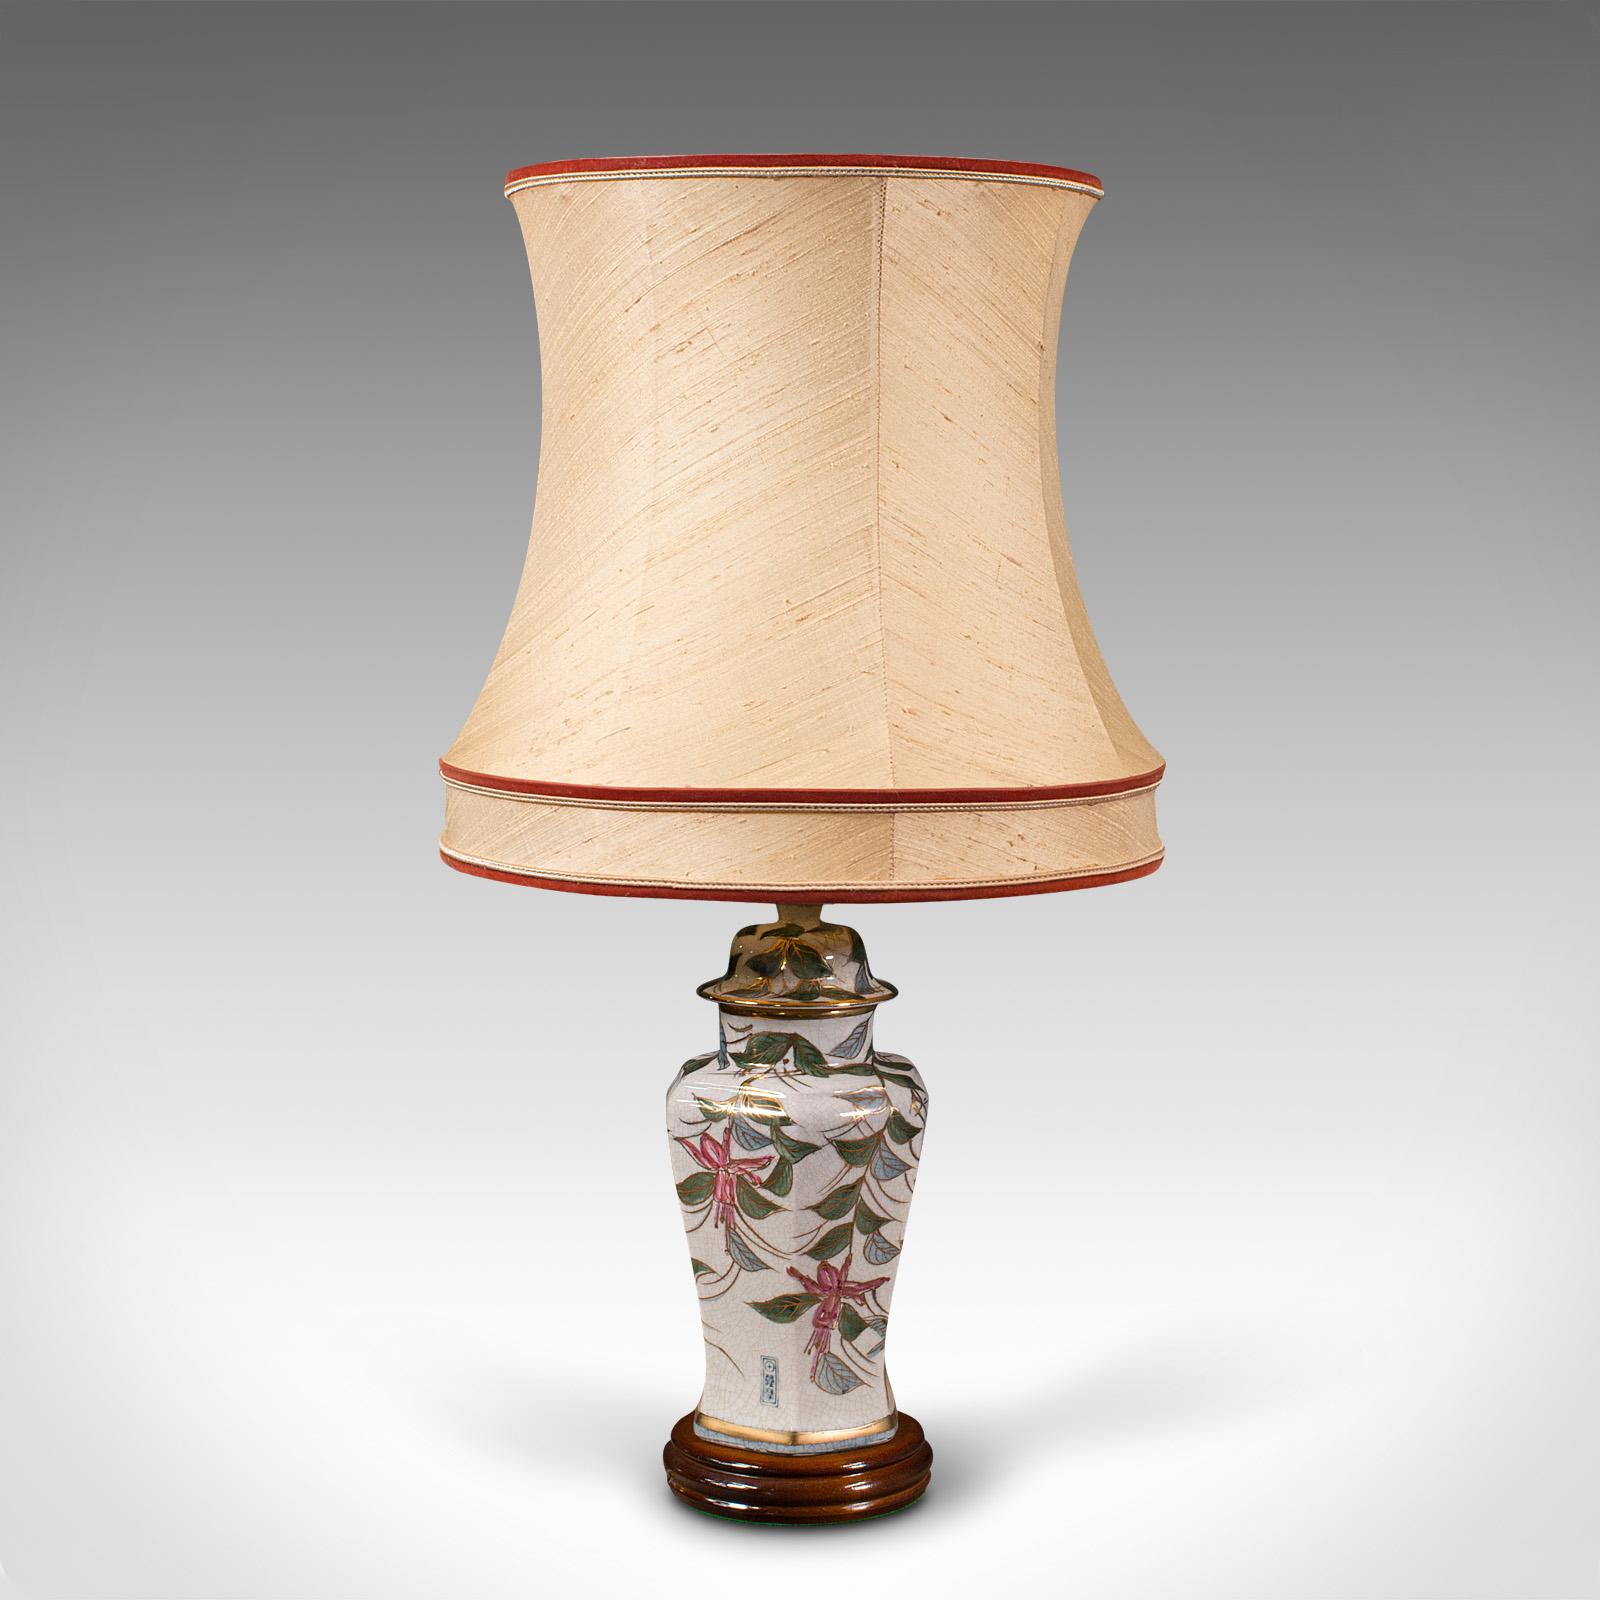 20th Century Vintage Table Lamp, Chinese, Ceramic, Decorative Light, Art Deco, Circa 1940 For Sale